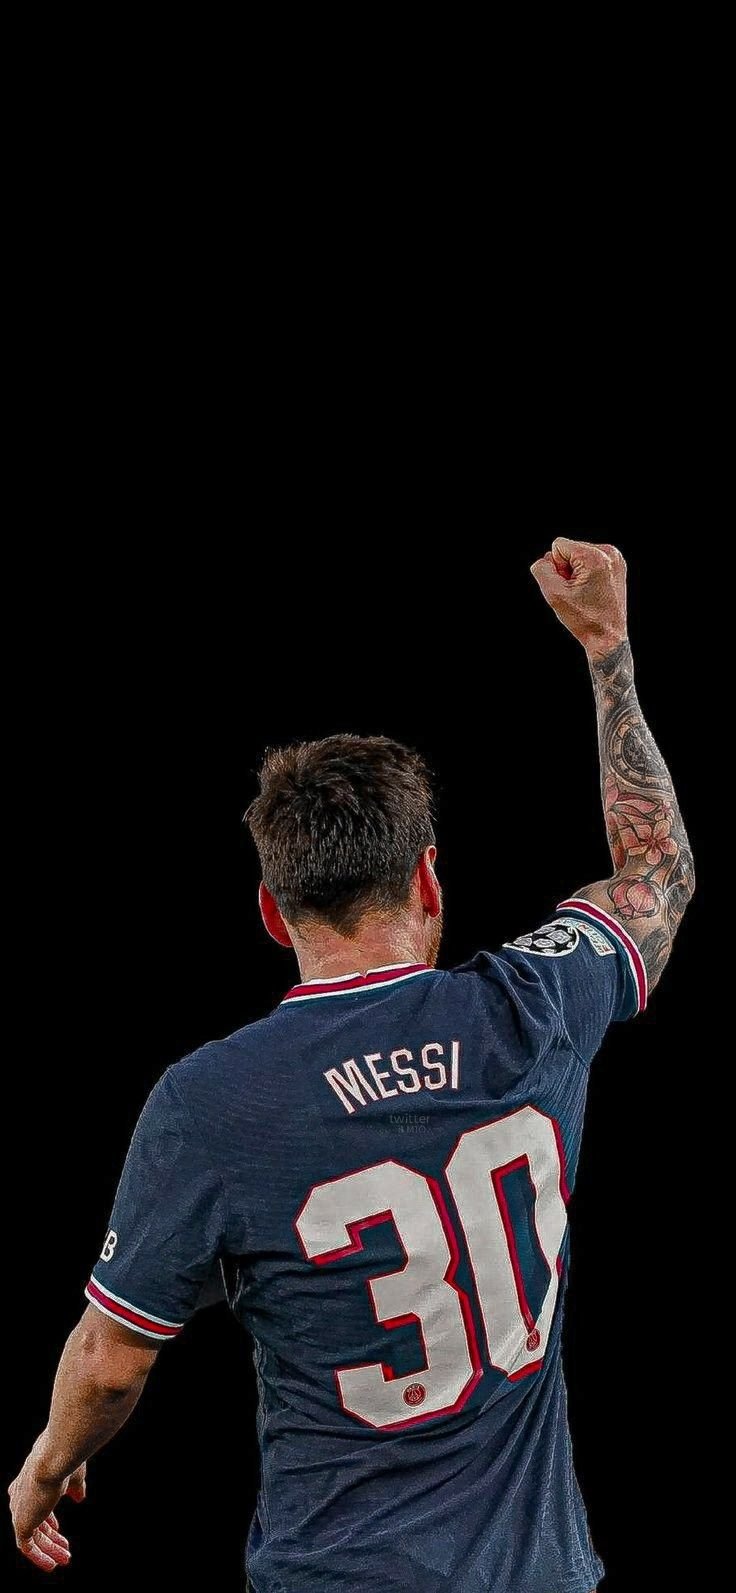 Messi Wallpaper Latest